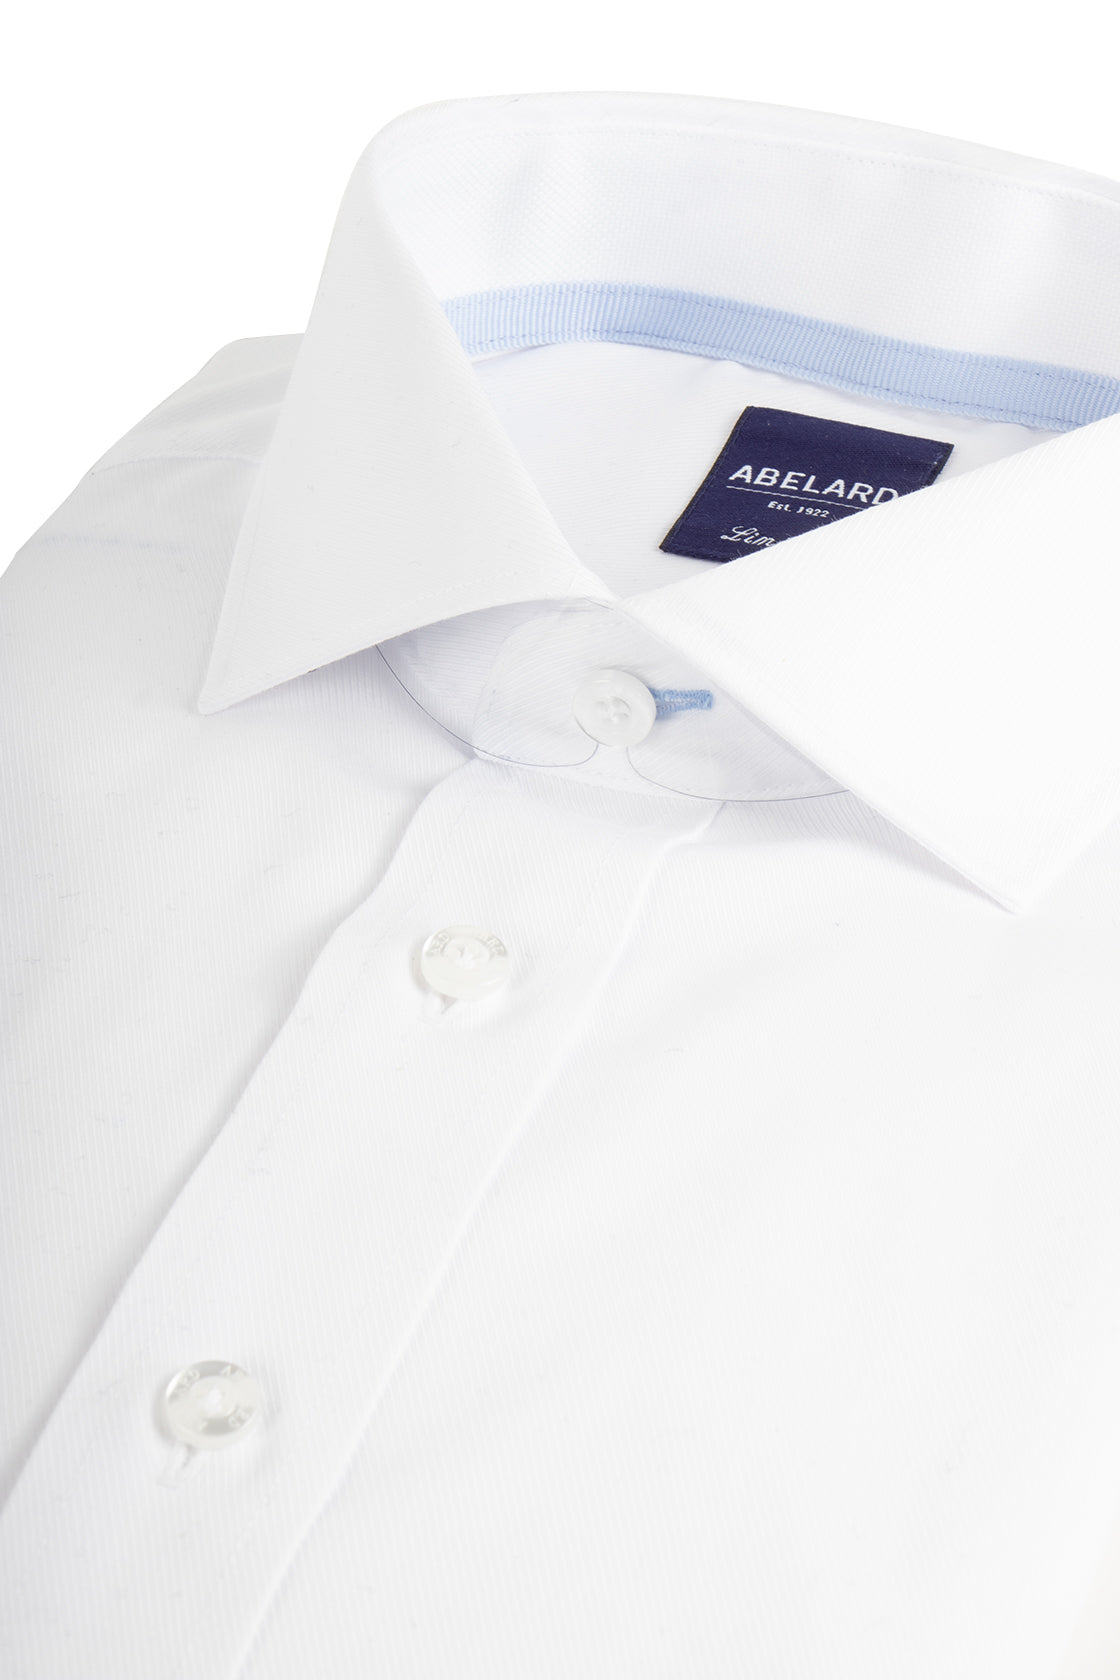 Abelard Classic Shirt White